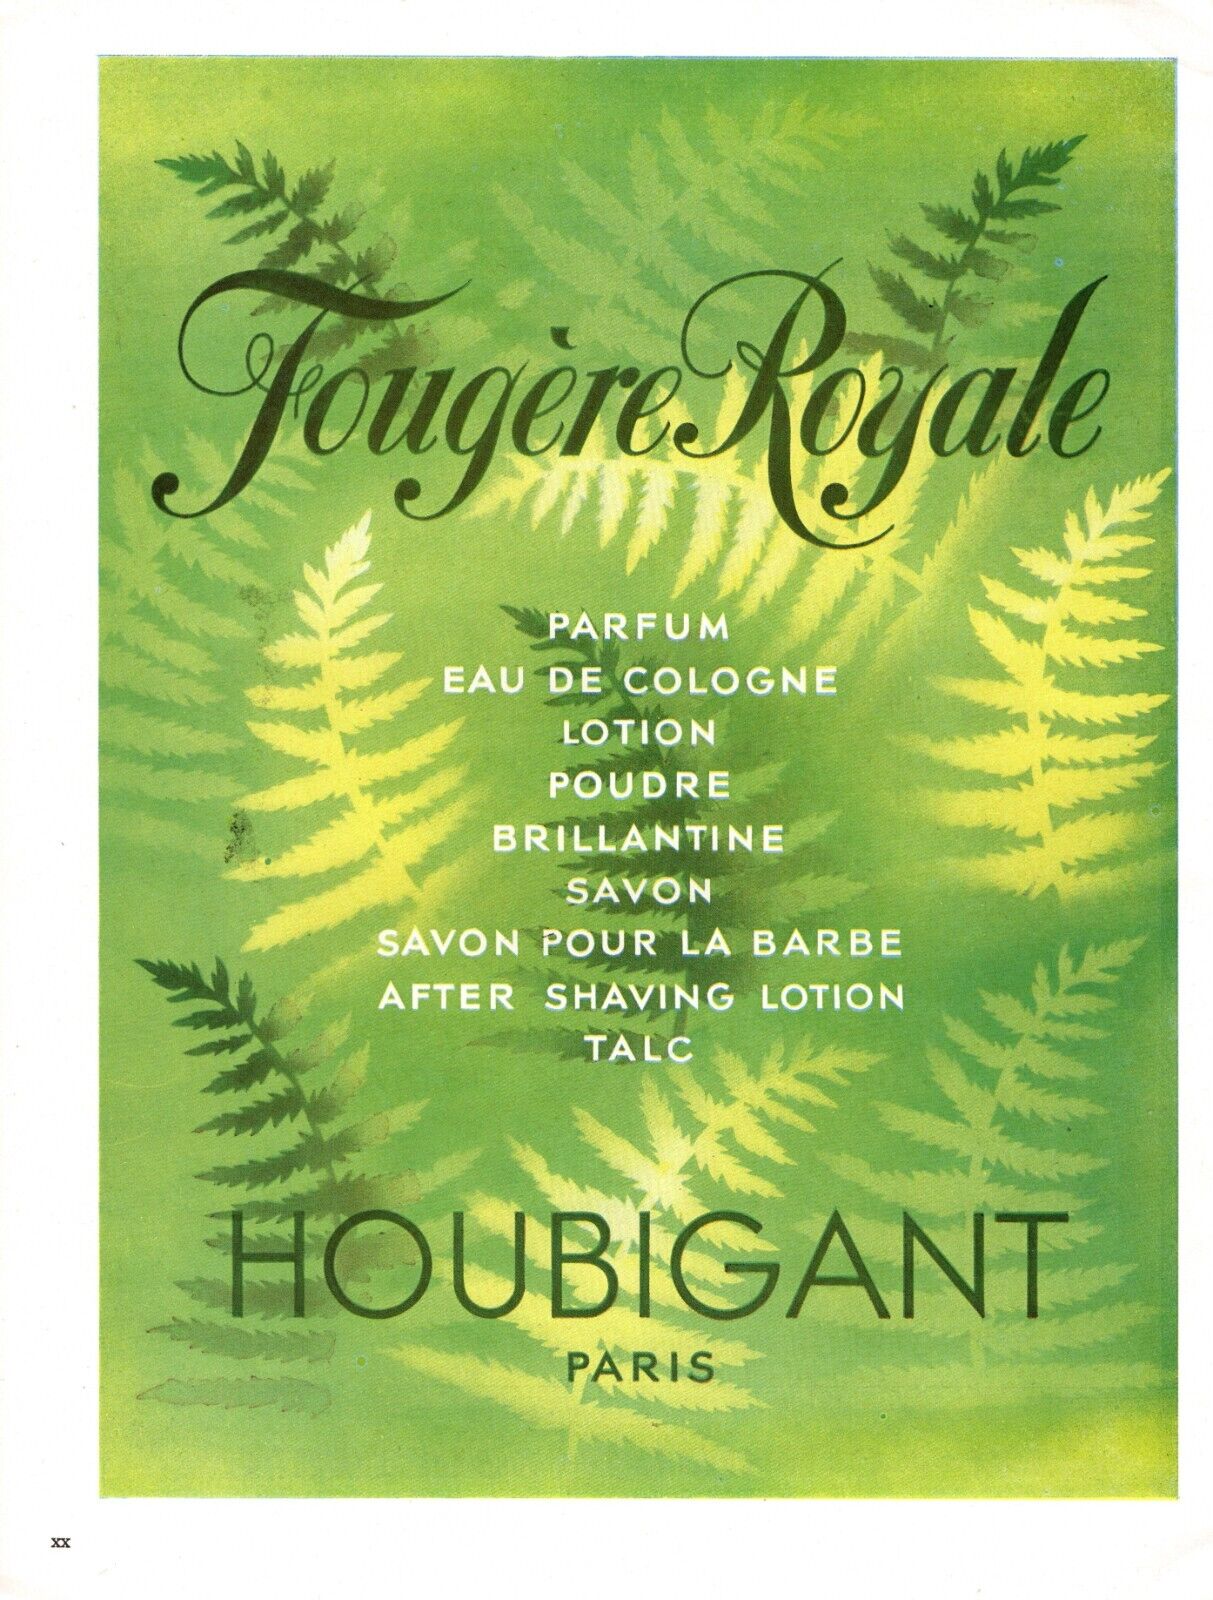 Original French Vintage Ad - Houbigant - Perfume Fougère Royale Cosmetics - 1949